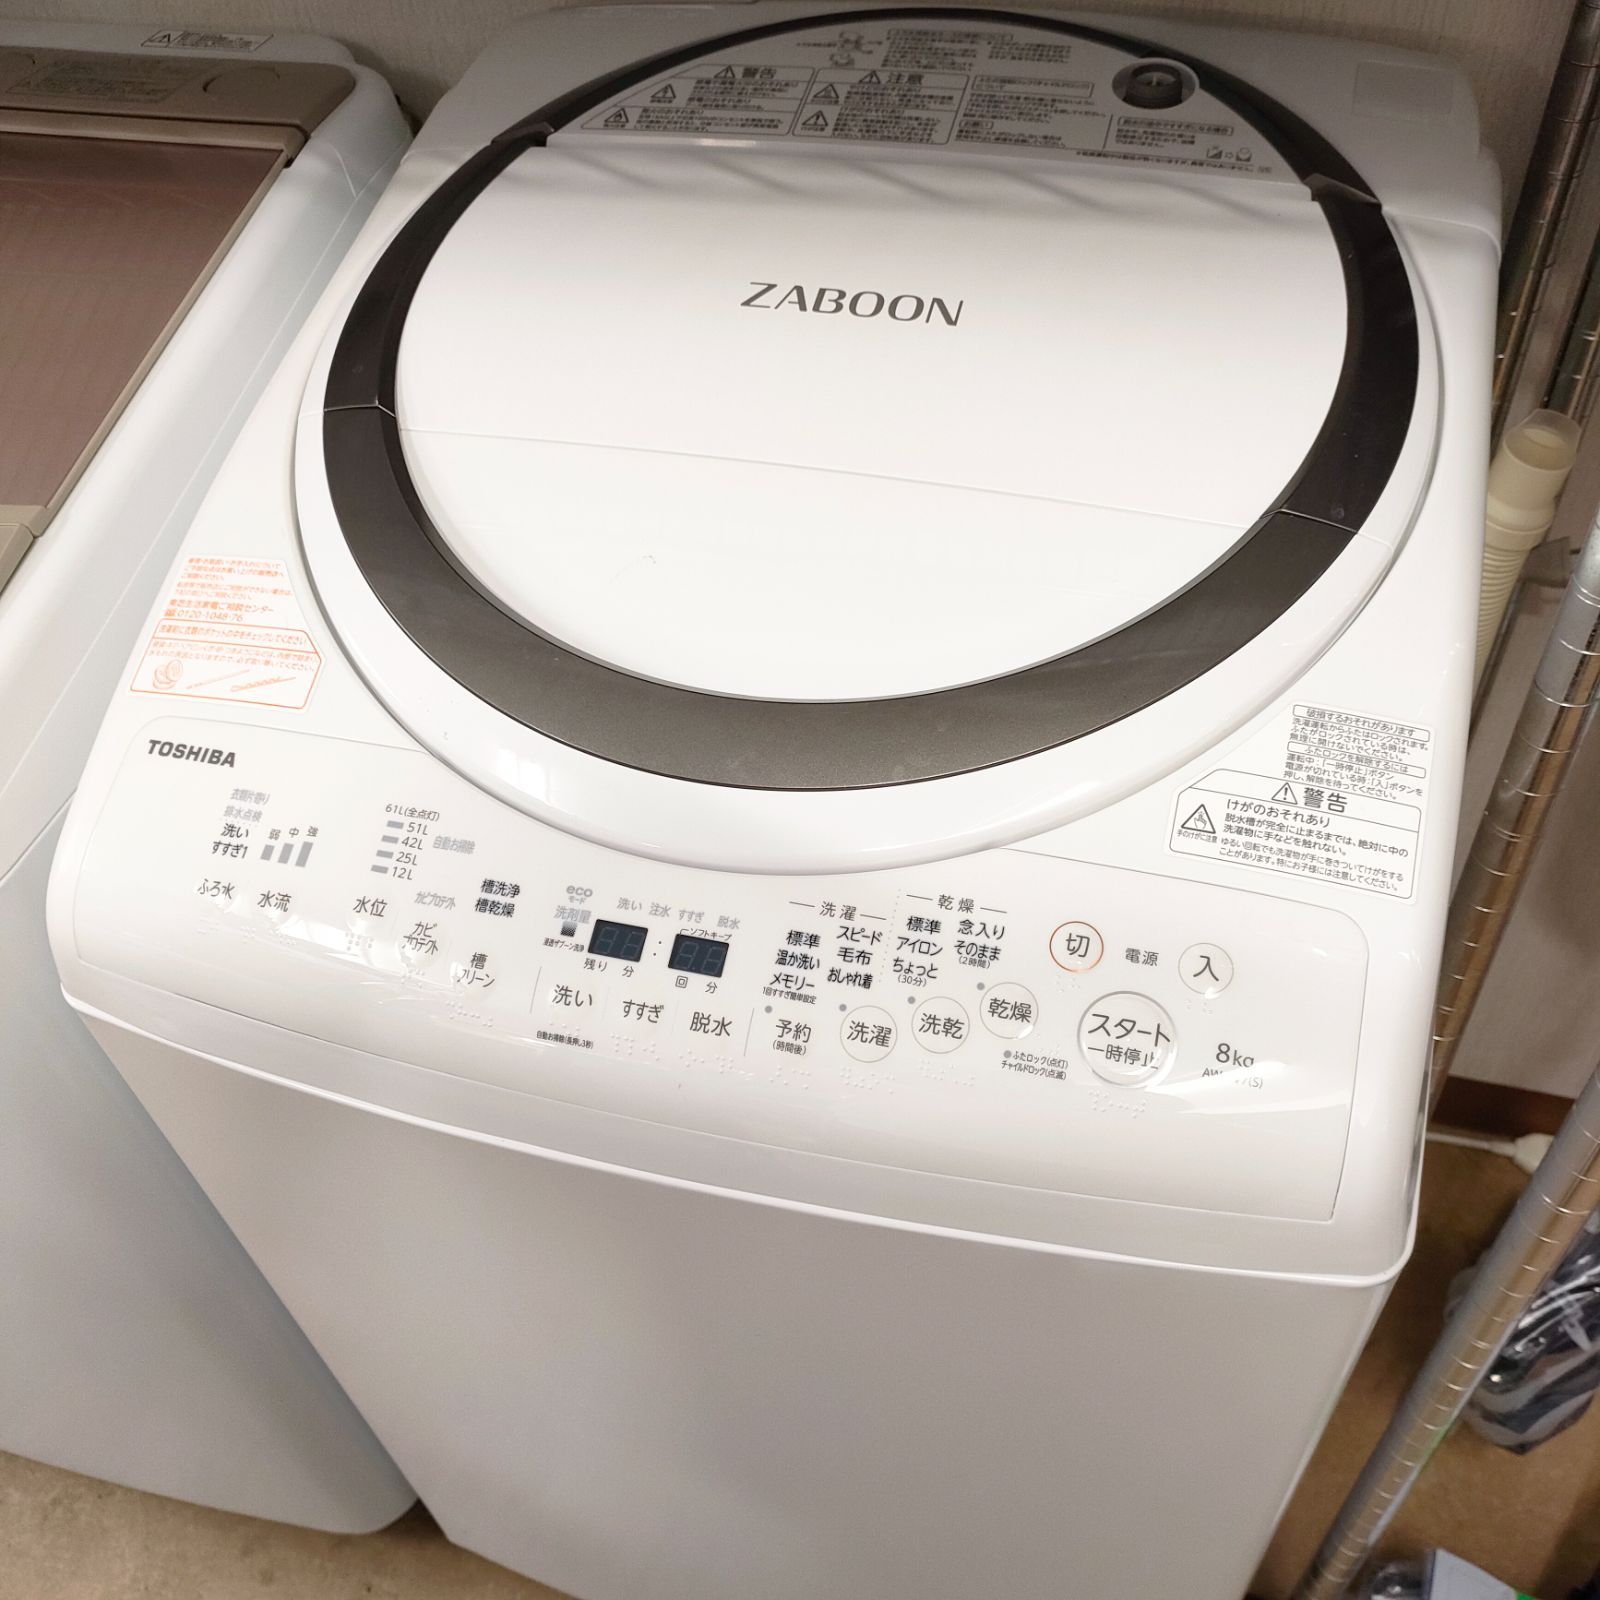 ◆TOSHIBA 洗濯乾燥機 ZABOON AW-8V7